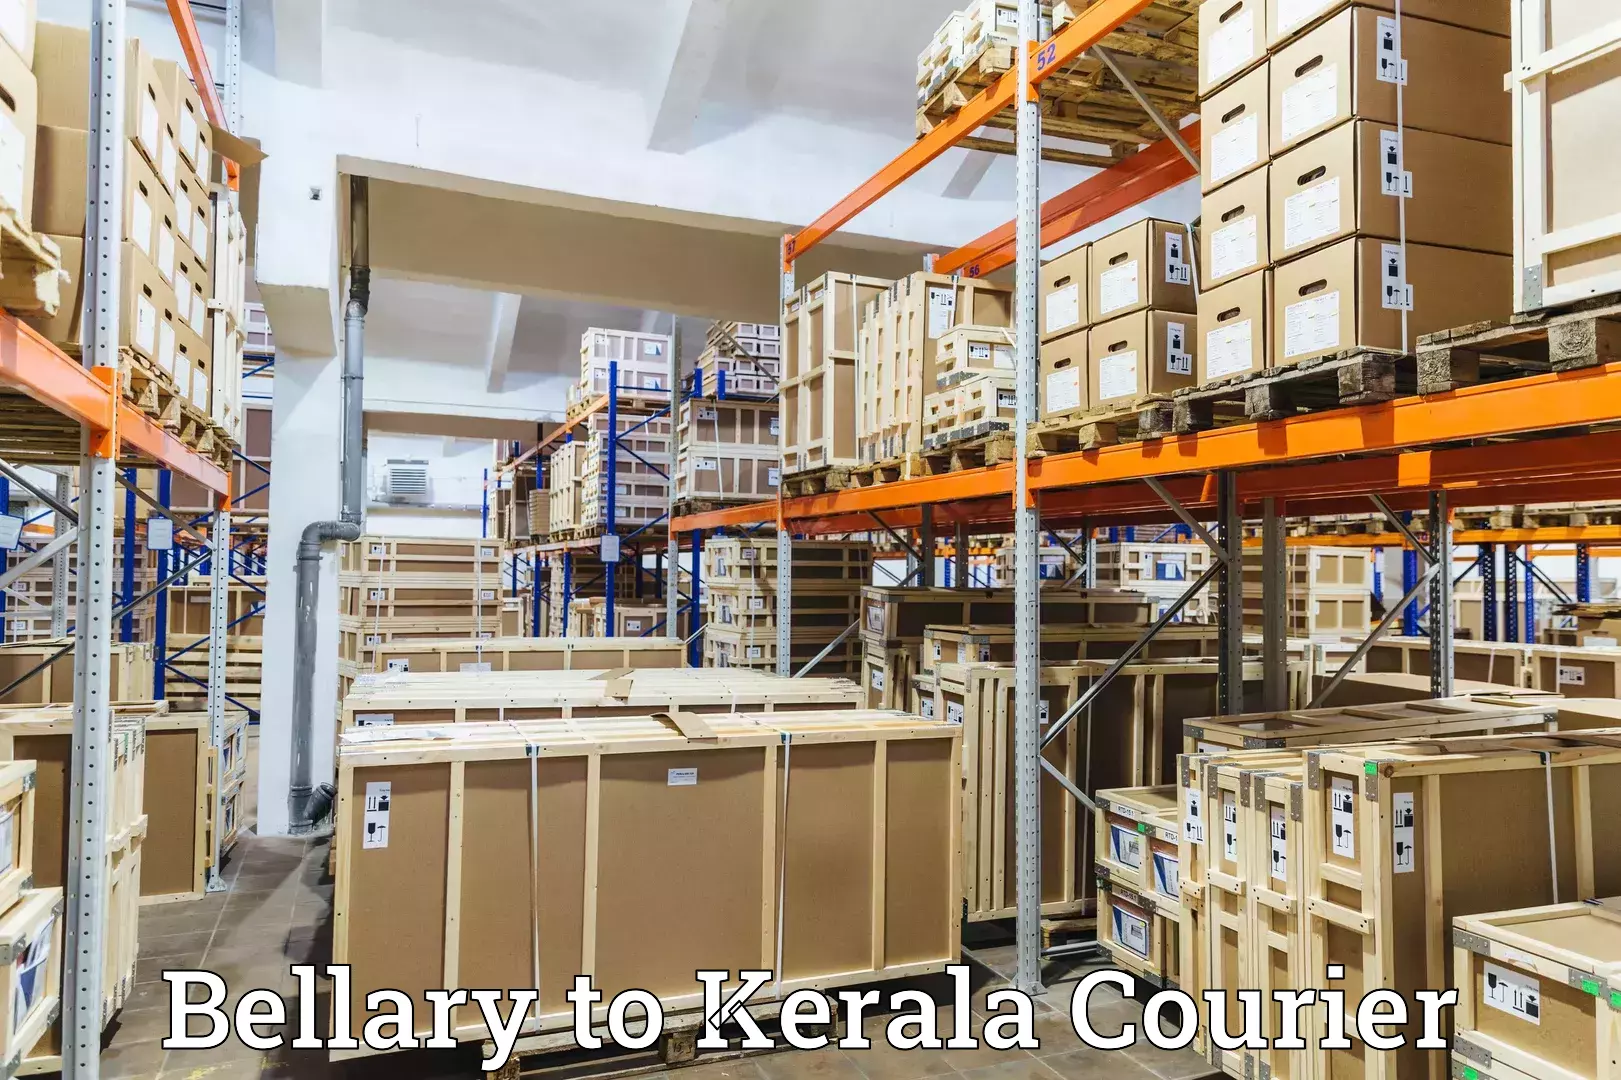 Express delivery network Bellary to Karunagappally